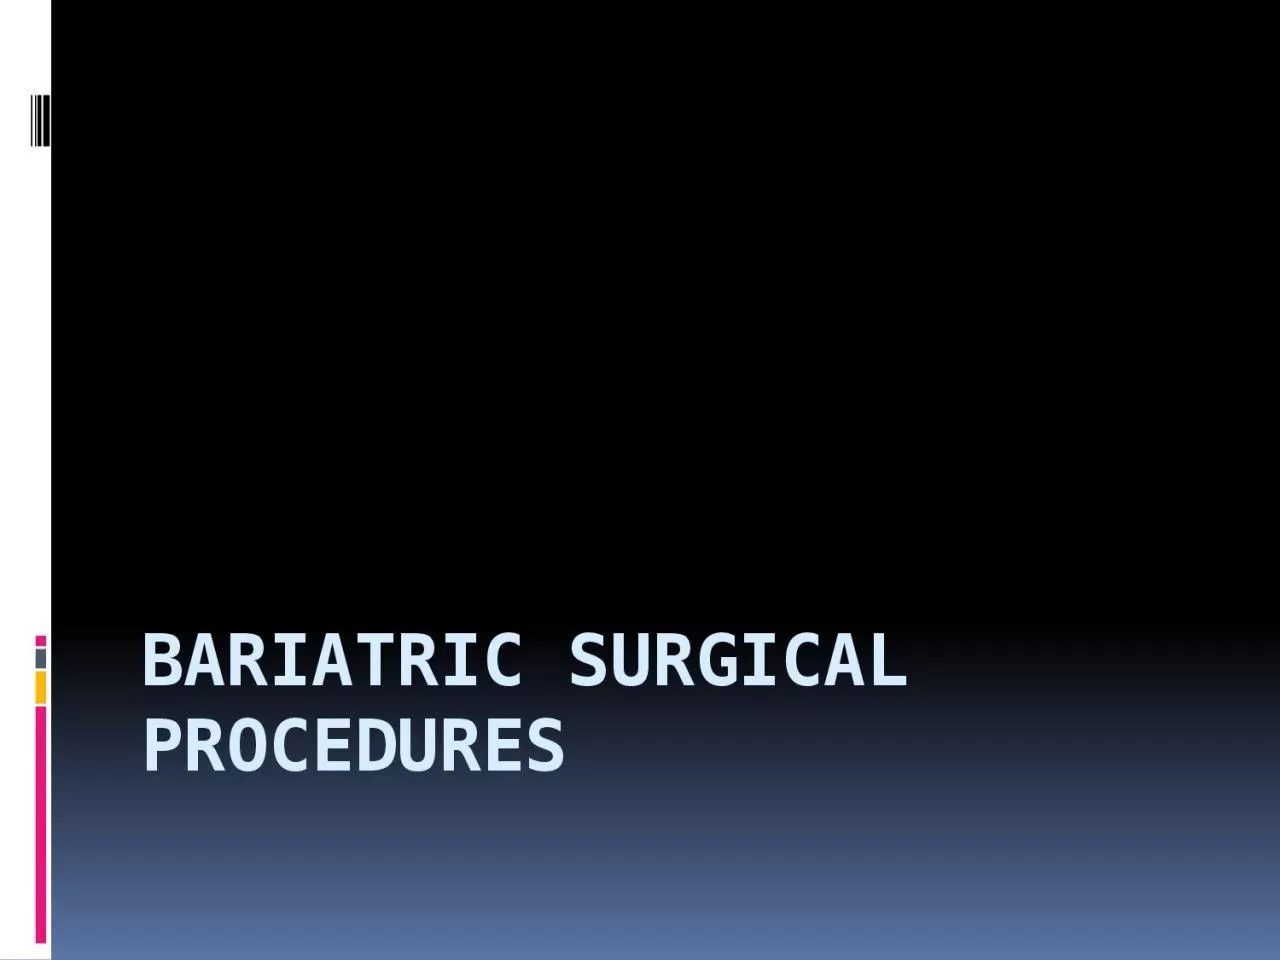 Bariatric surgical procedures